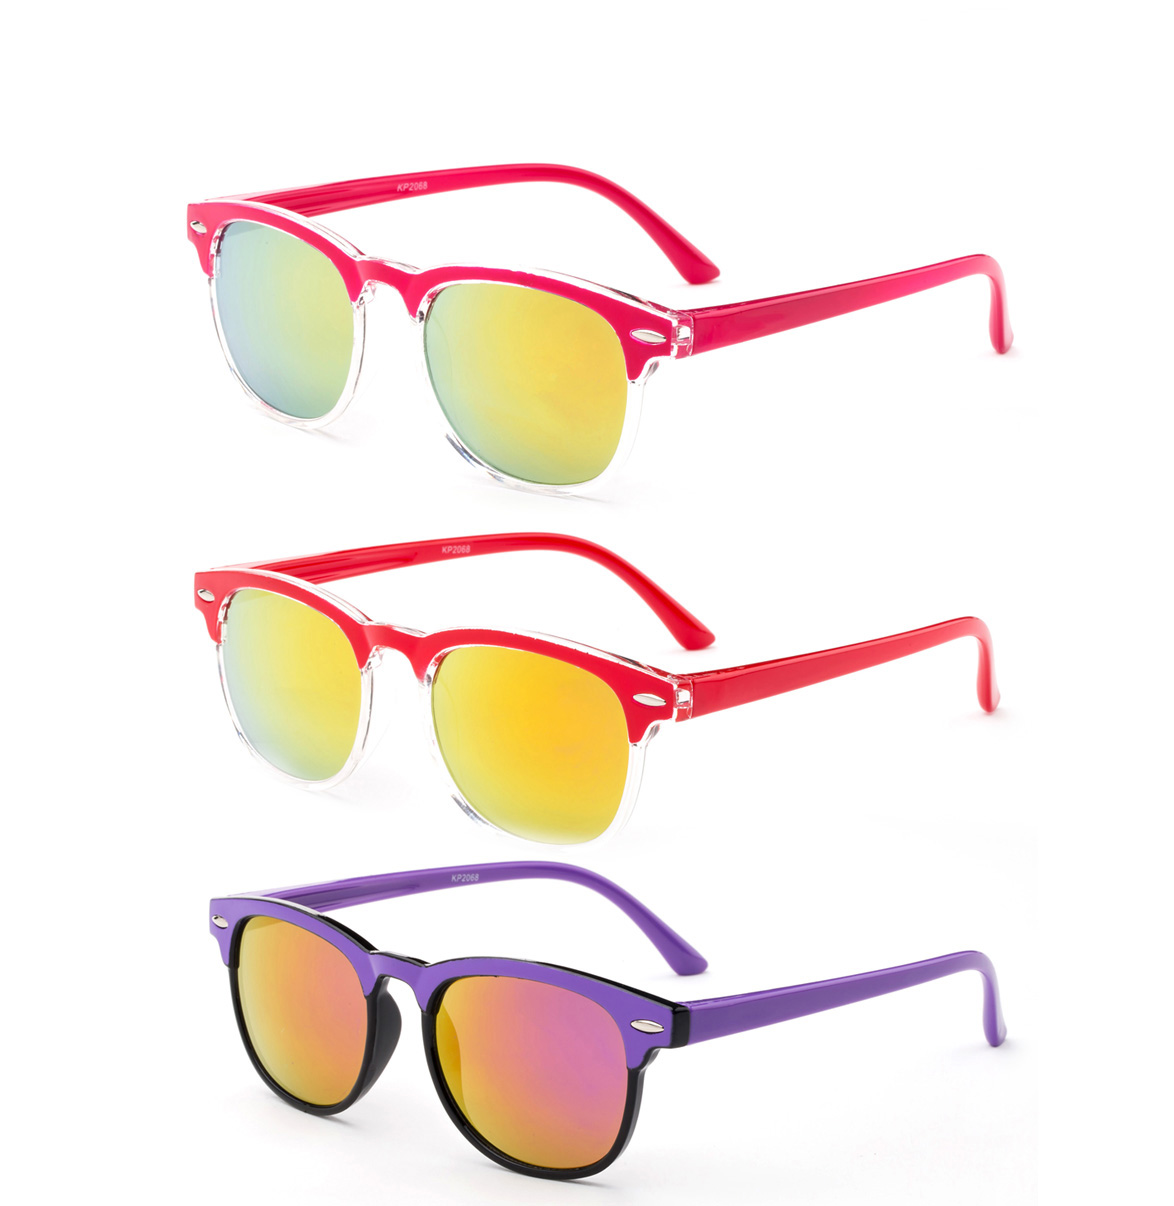 3 Pairs Newbee Fashion-Kyra Kids Two Tone Vintage Style Sunglasses Flash Mirror Lens Girls Boys Sunglasses UV Protection - image 1 of 1